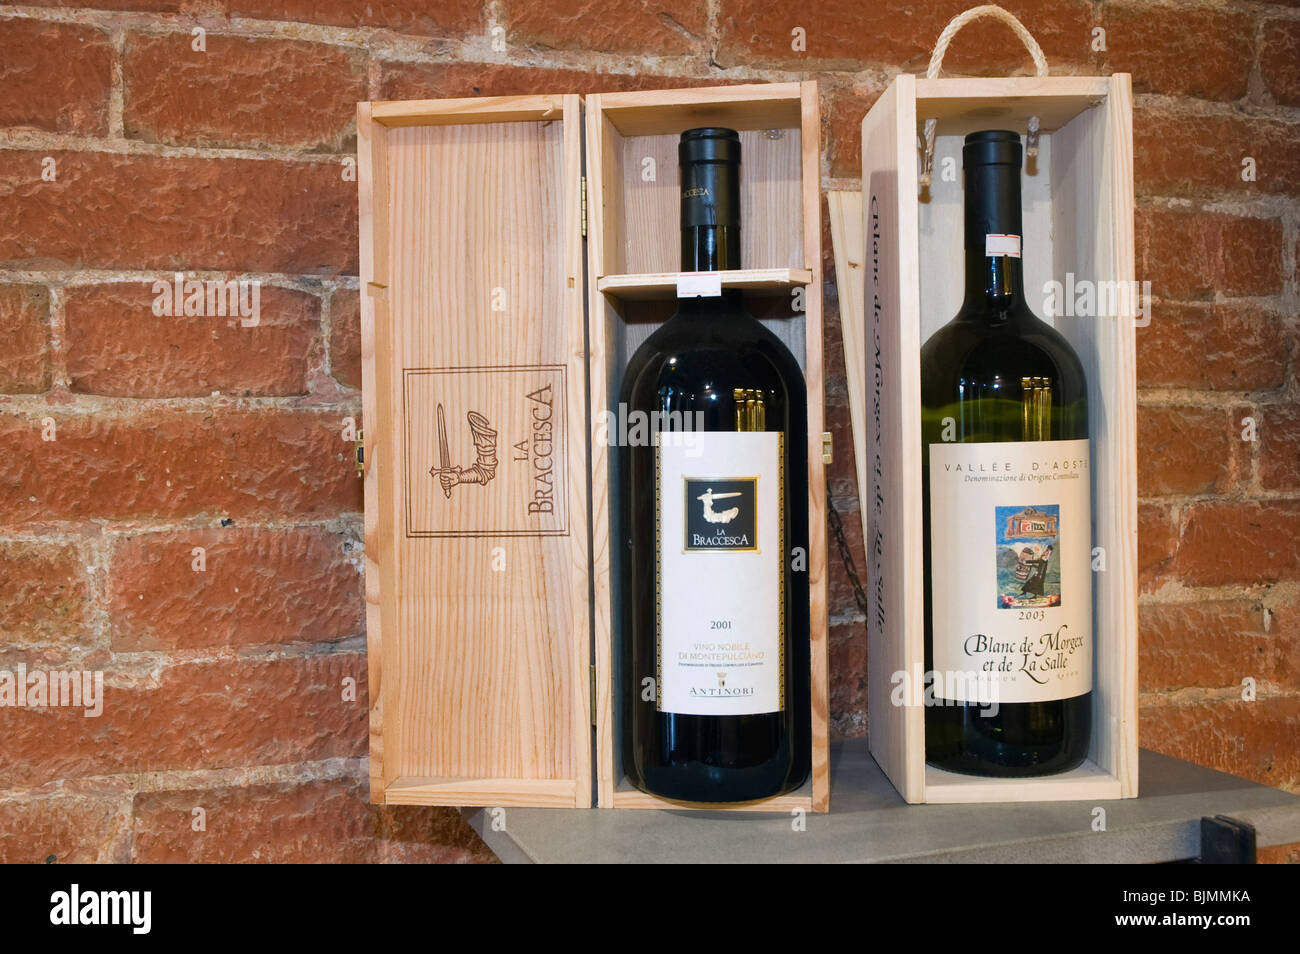 Antinori, Aoste wines in wooden boxes, Enoteca Italiana wine shop, Siena, Tuscany, Italy, Europe Stock Photo